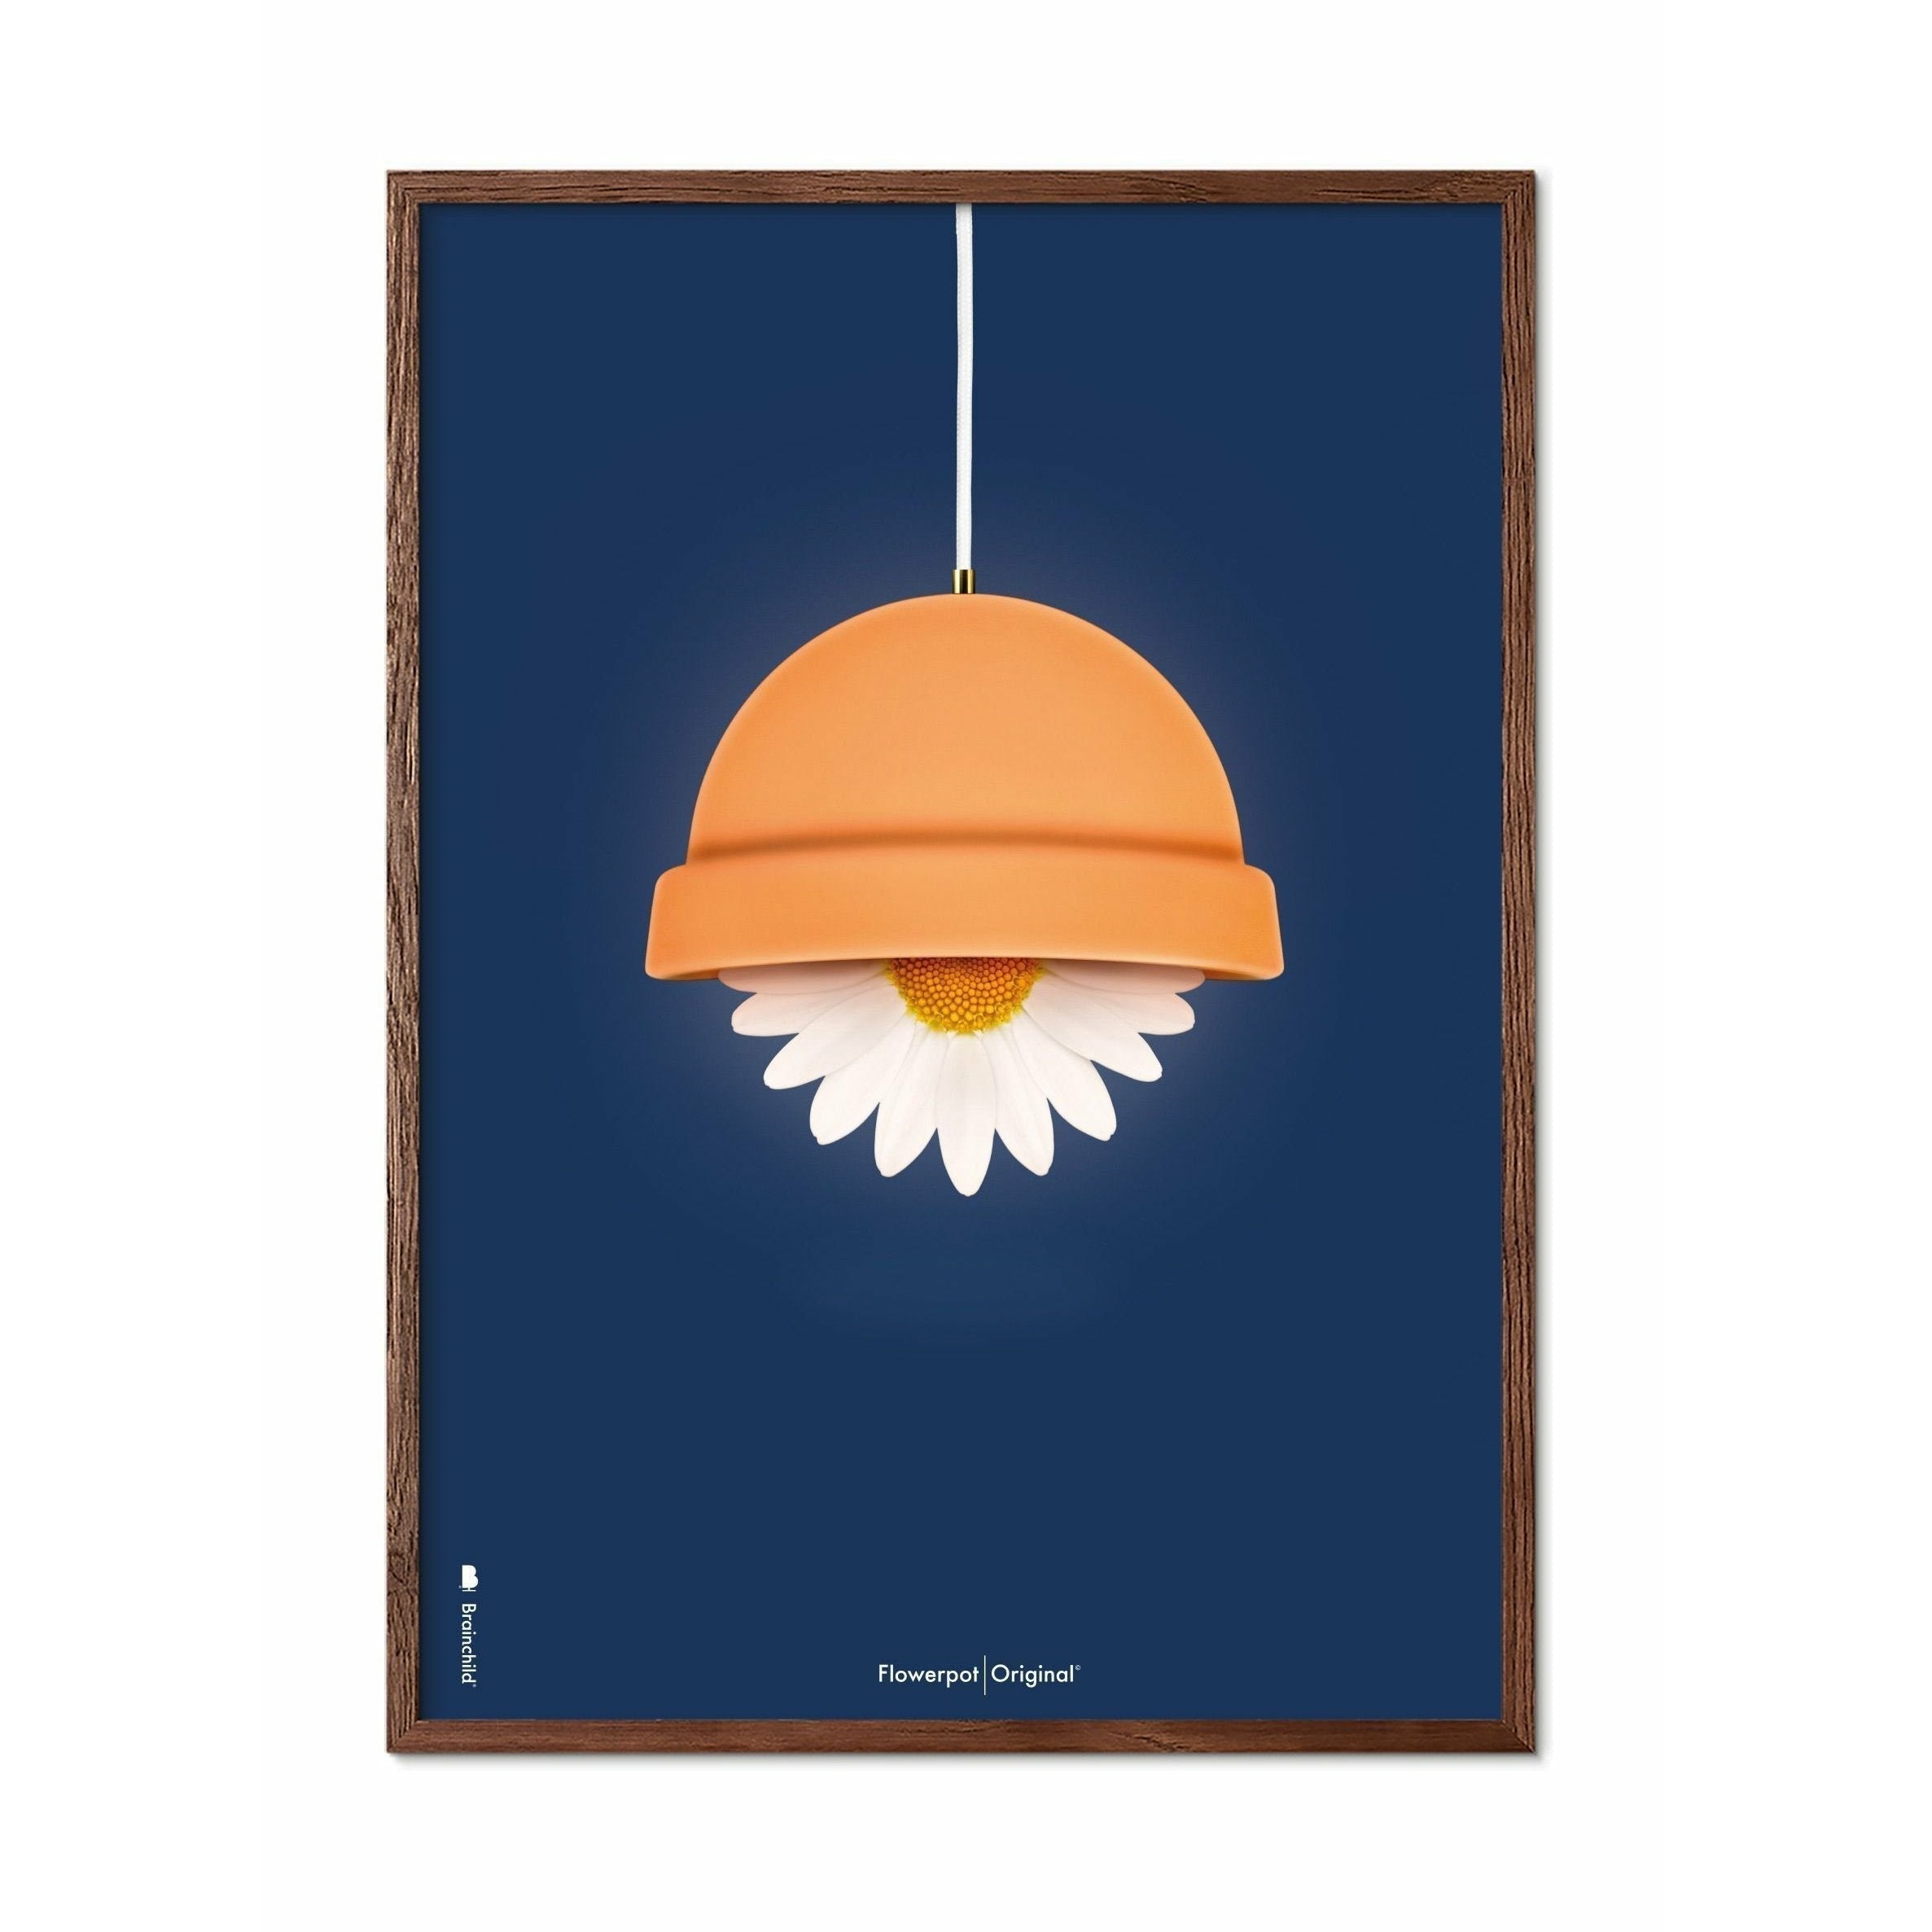 Brainchild Flowerpot Klassisk Plakat, Ramme I Mørkt Træ A5, Mørkeblå Baggrund